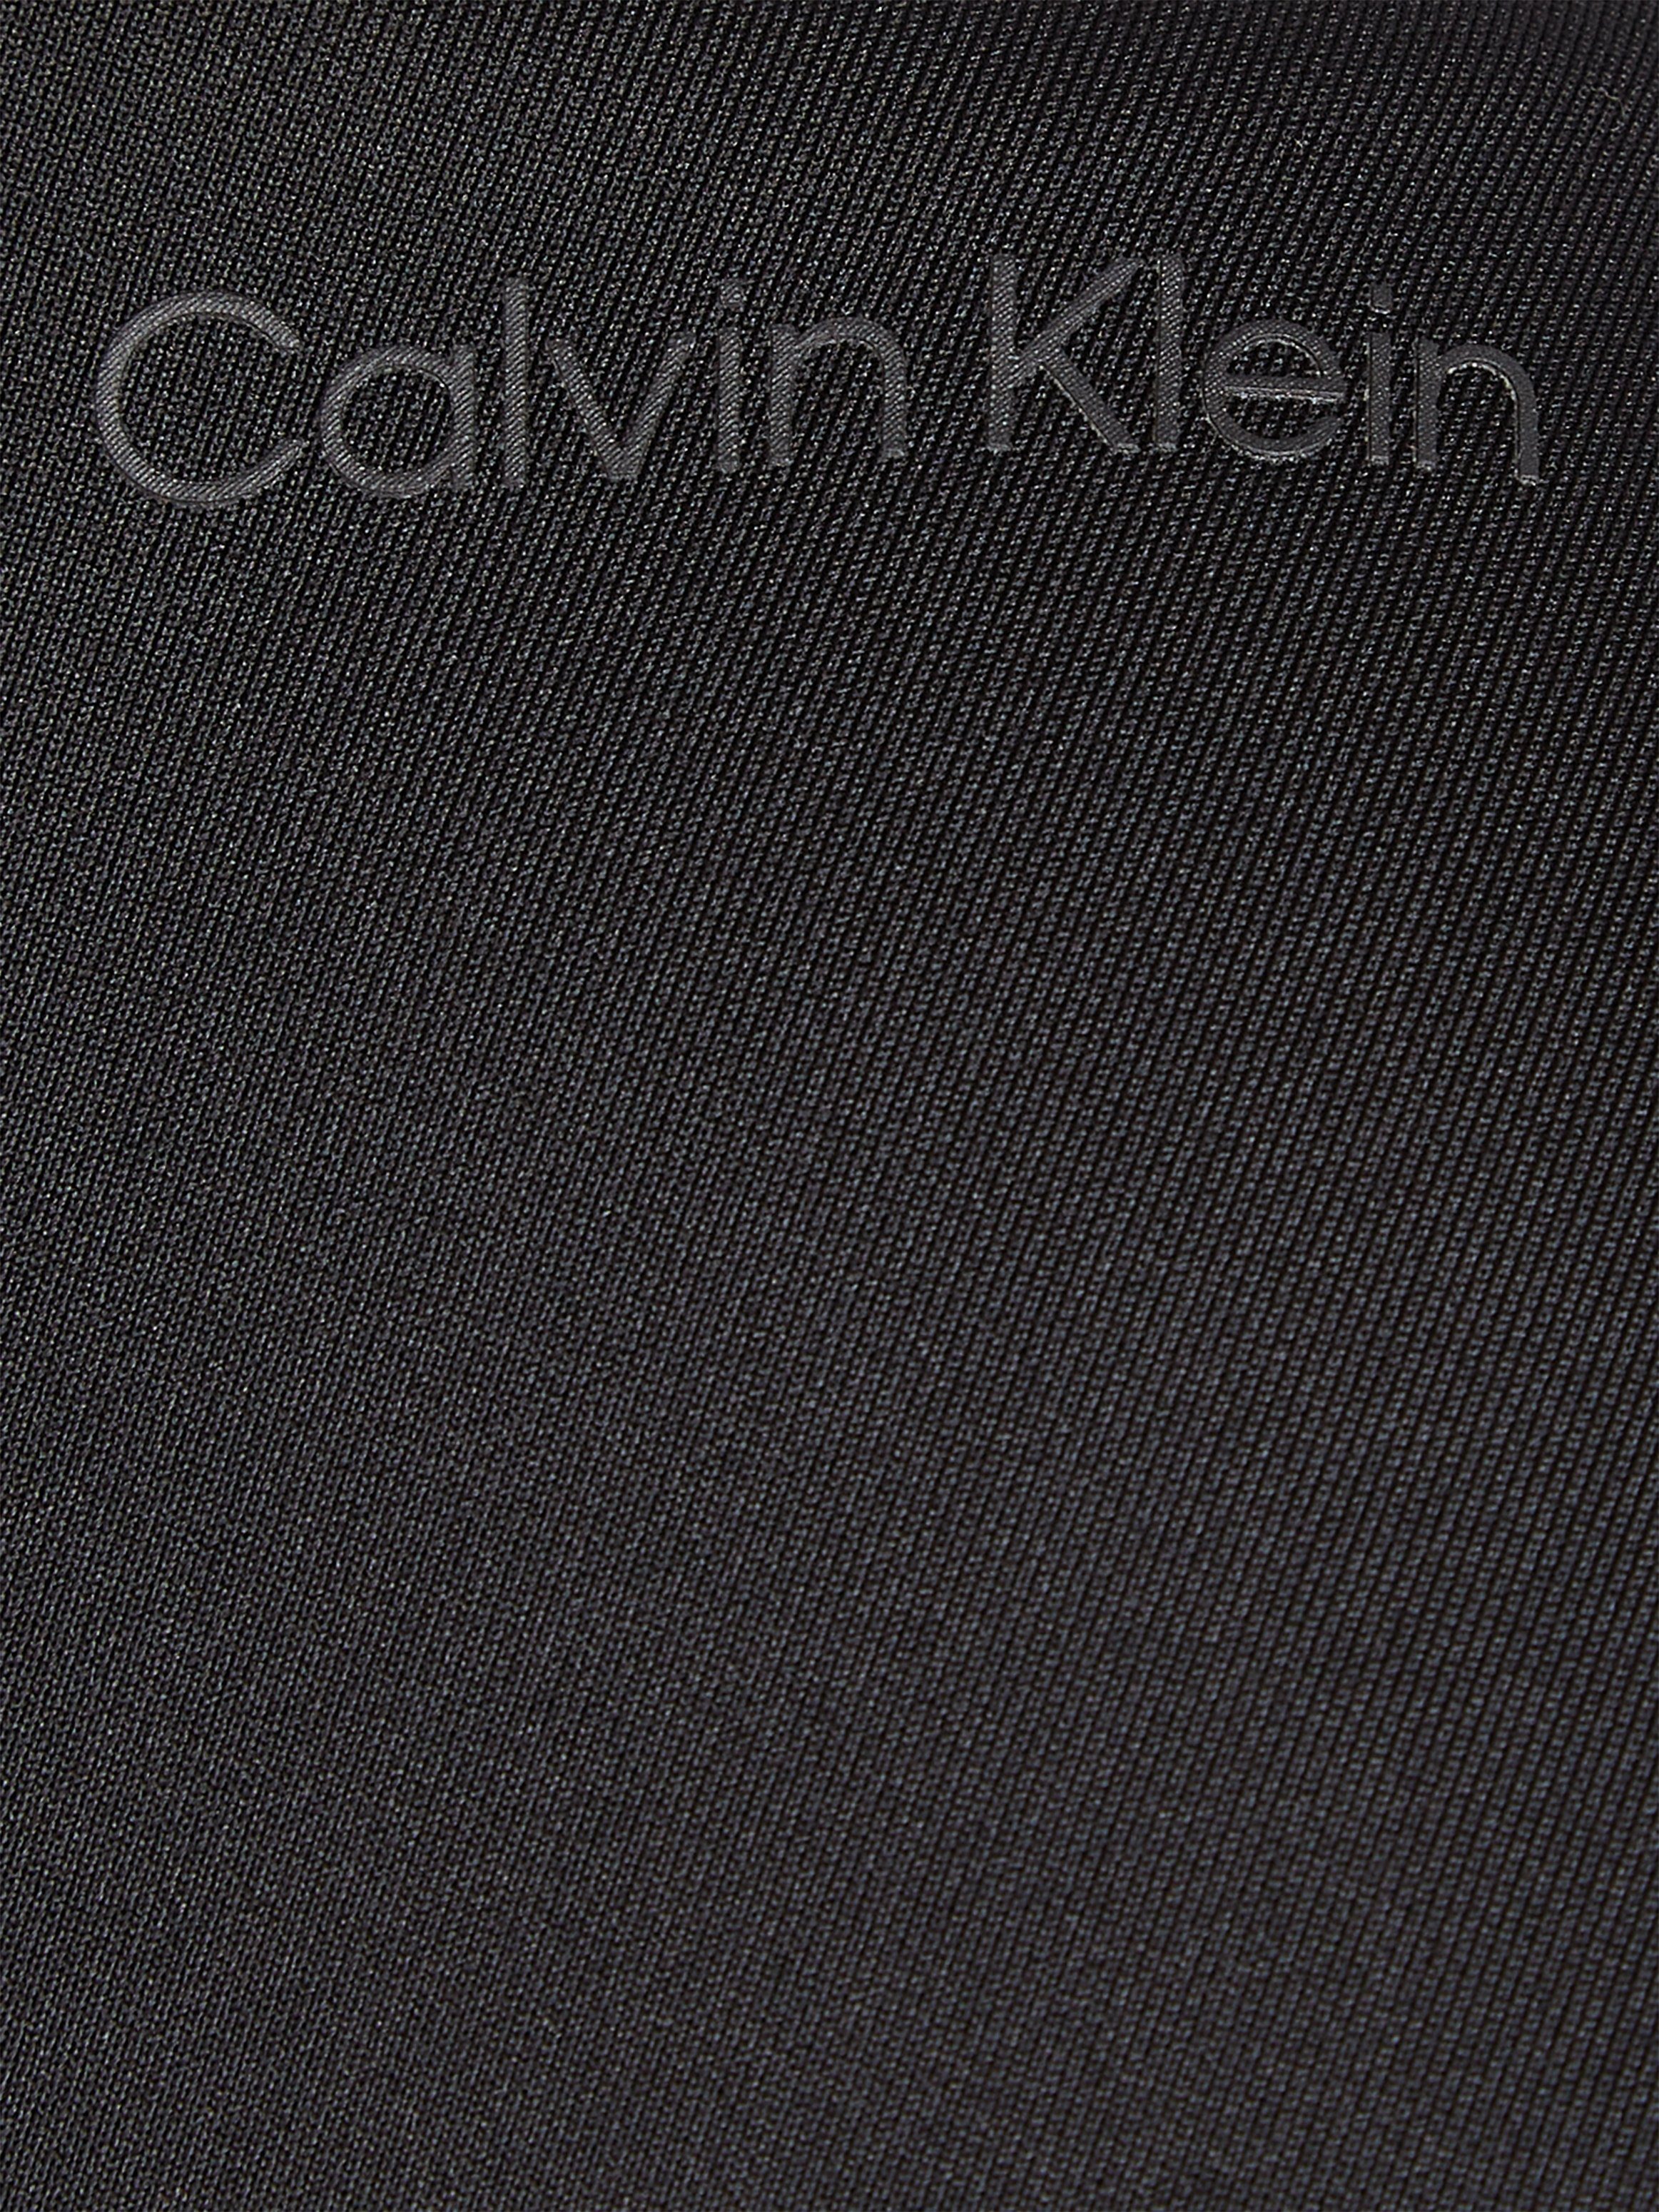 Klein TECHNICAL Calvin KNIT Etuikleid TANK DRESS MINI